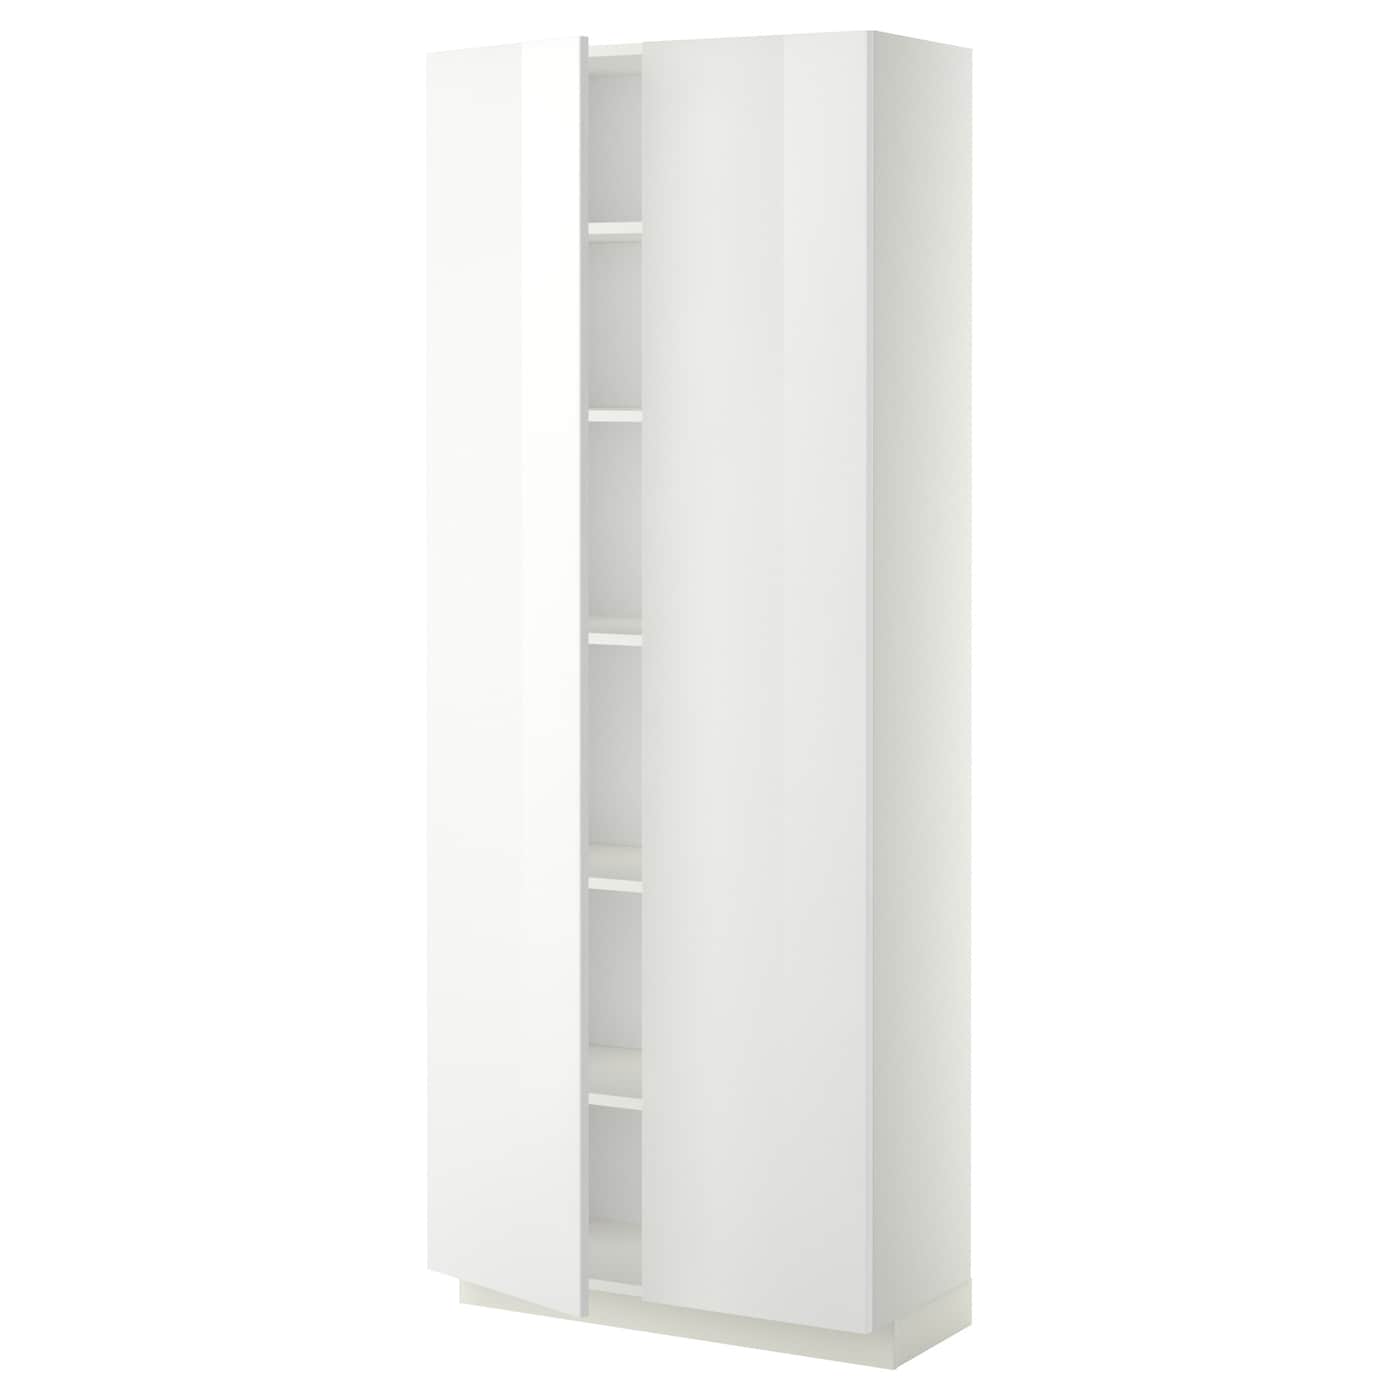 Высокий кухонный шкаф с полками - IKEA METOD/МЕТОД ИКЕА, 200х37х80 см, белый глянцевый